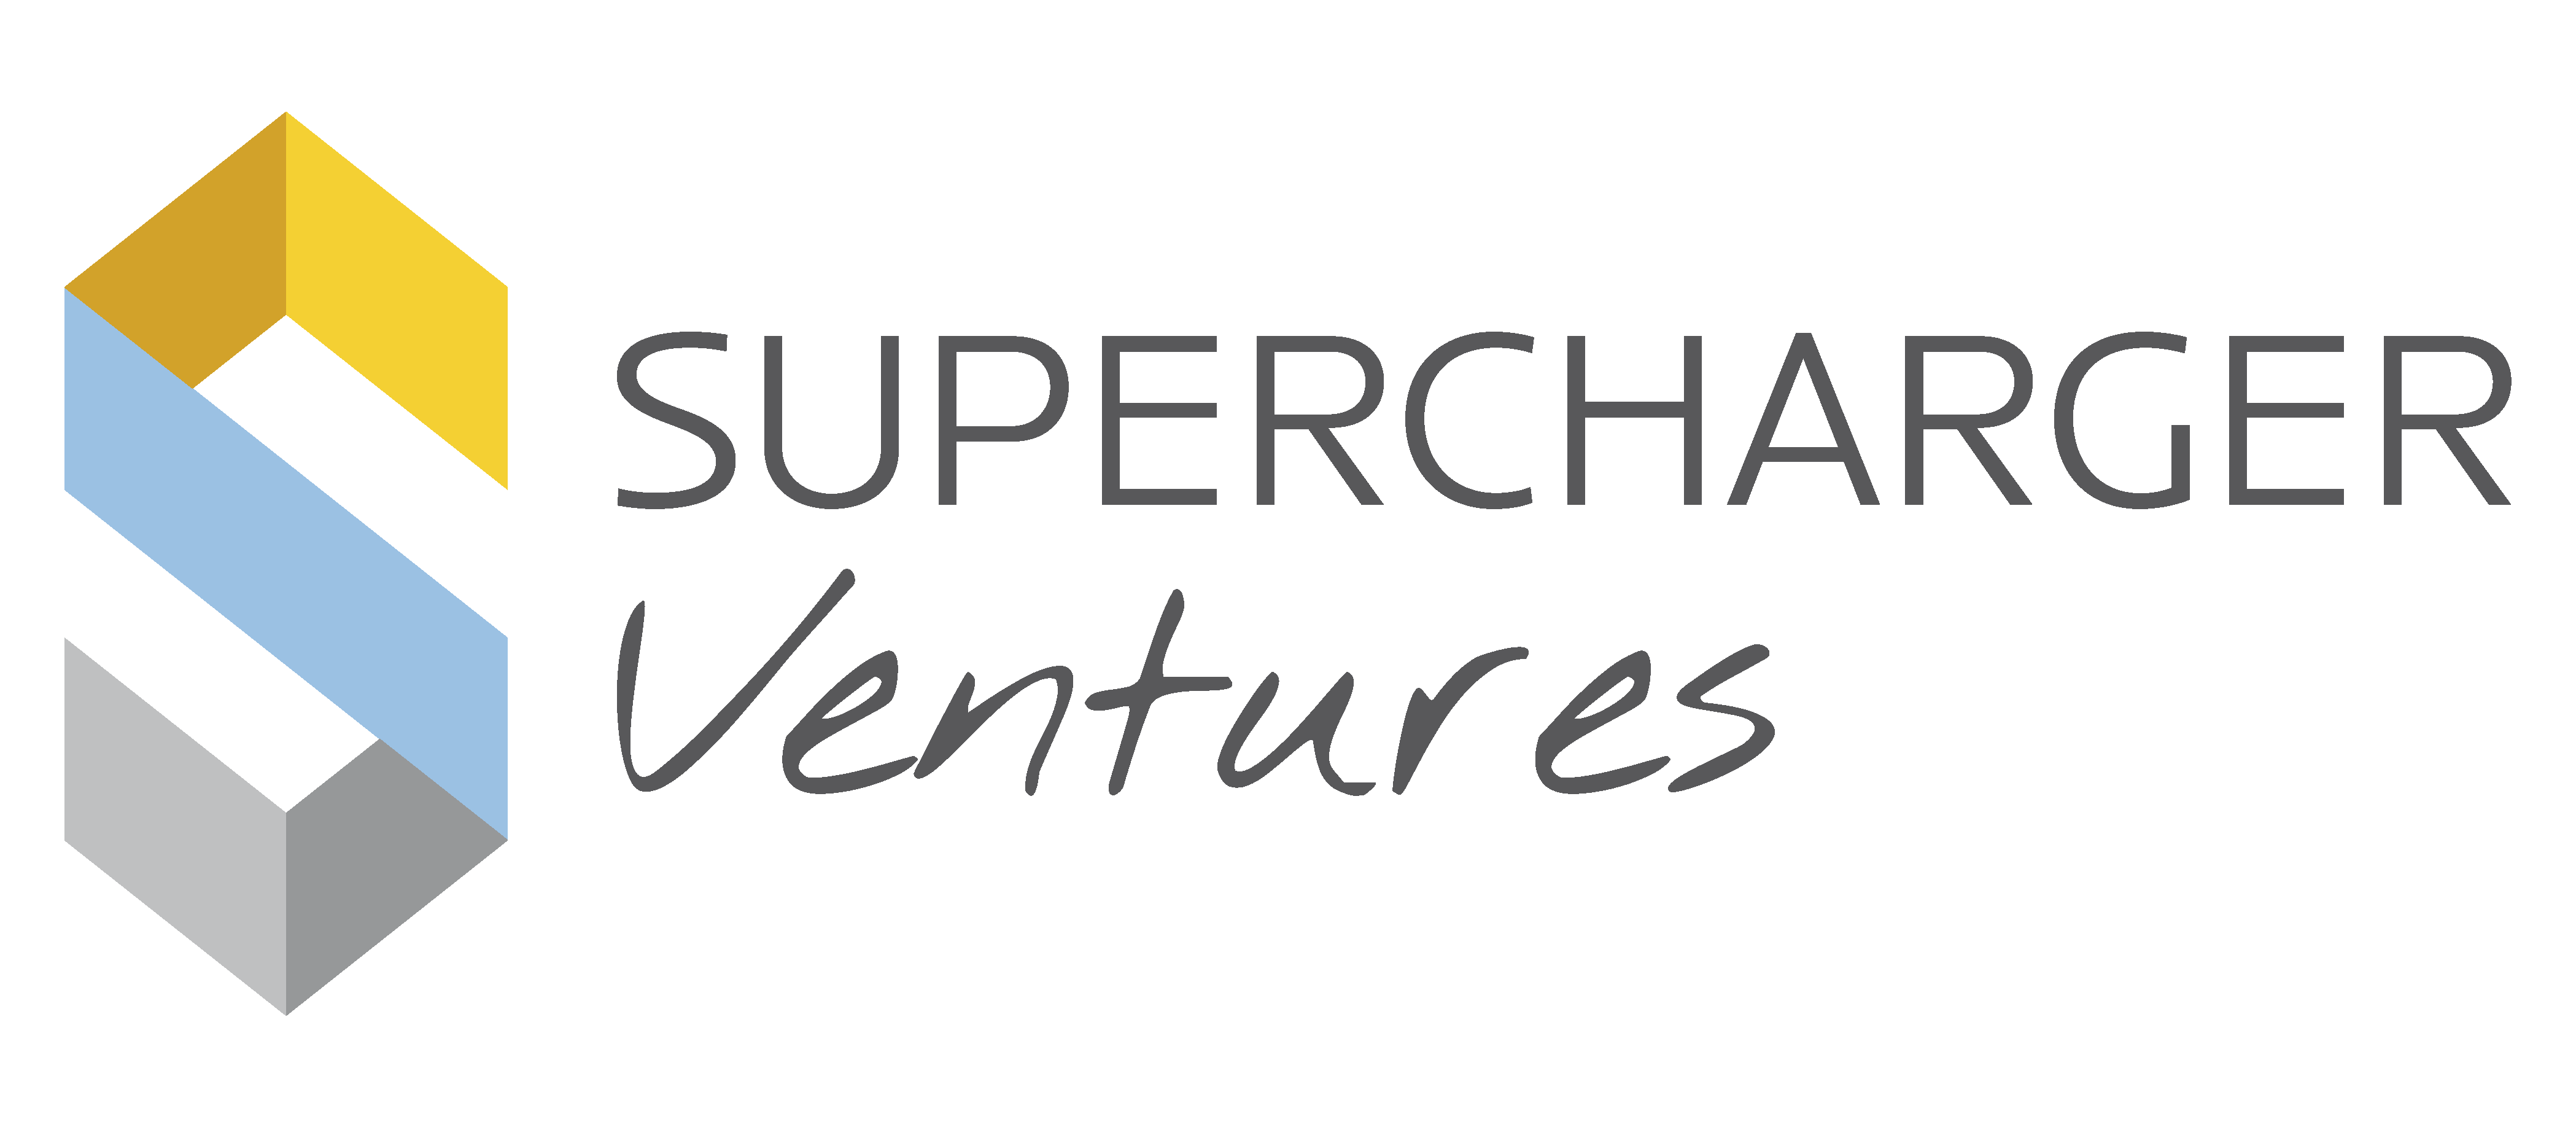 Supercharger Ventures